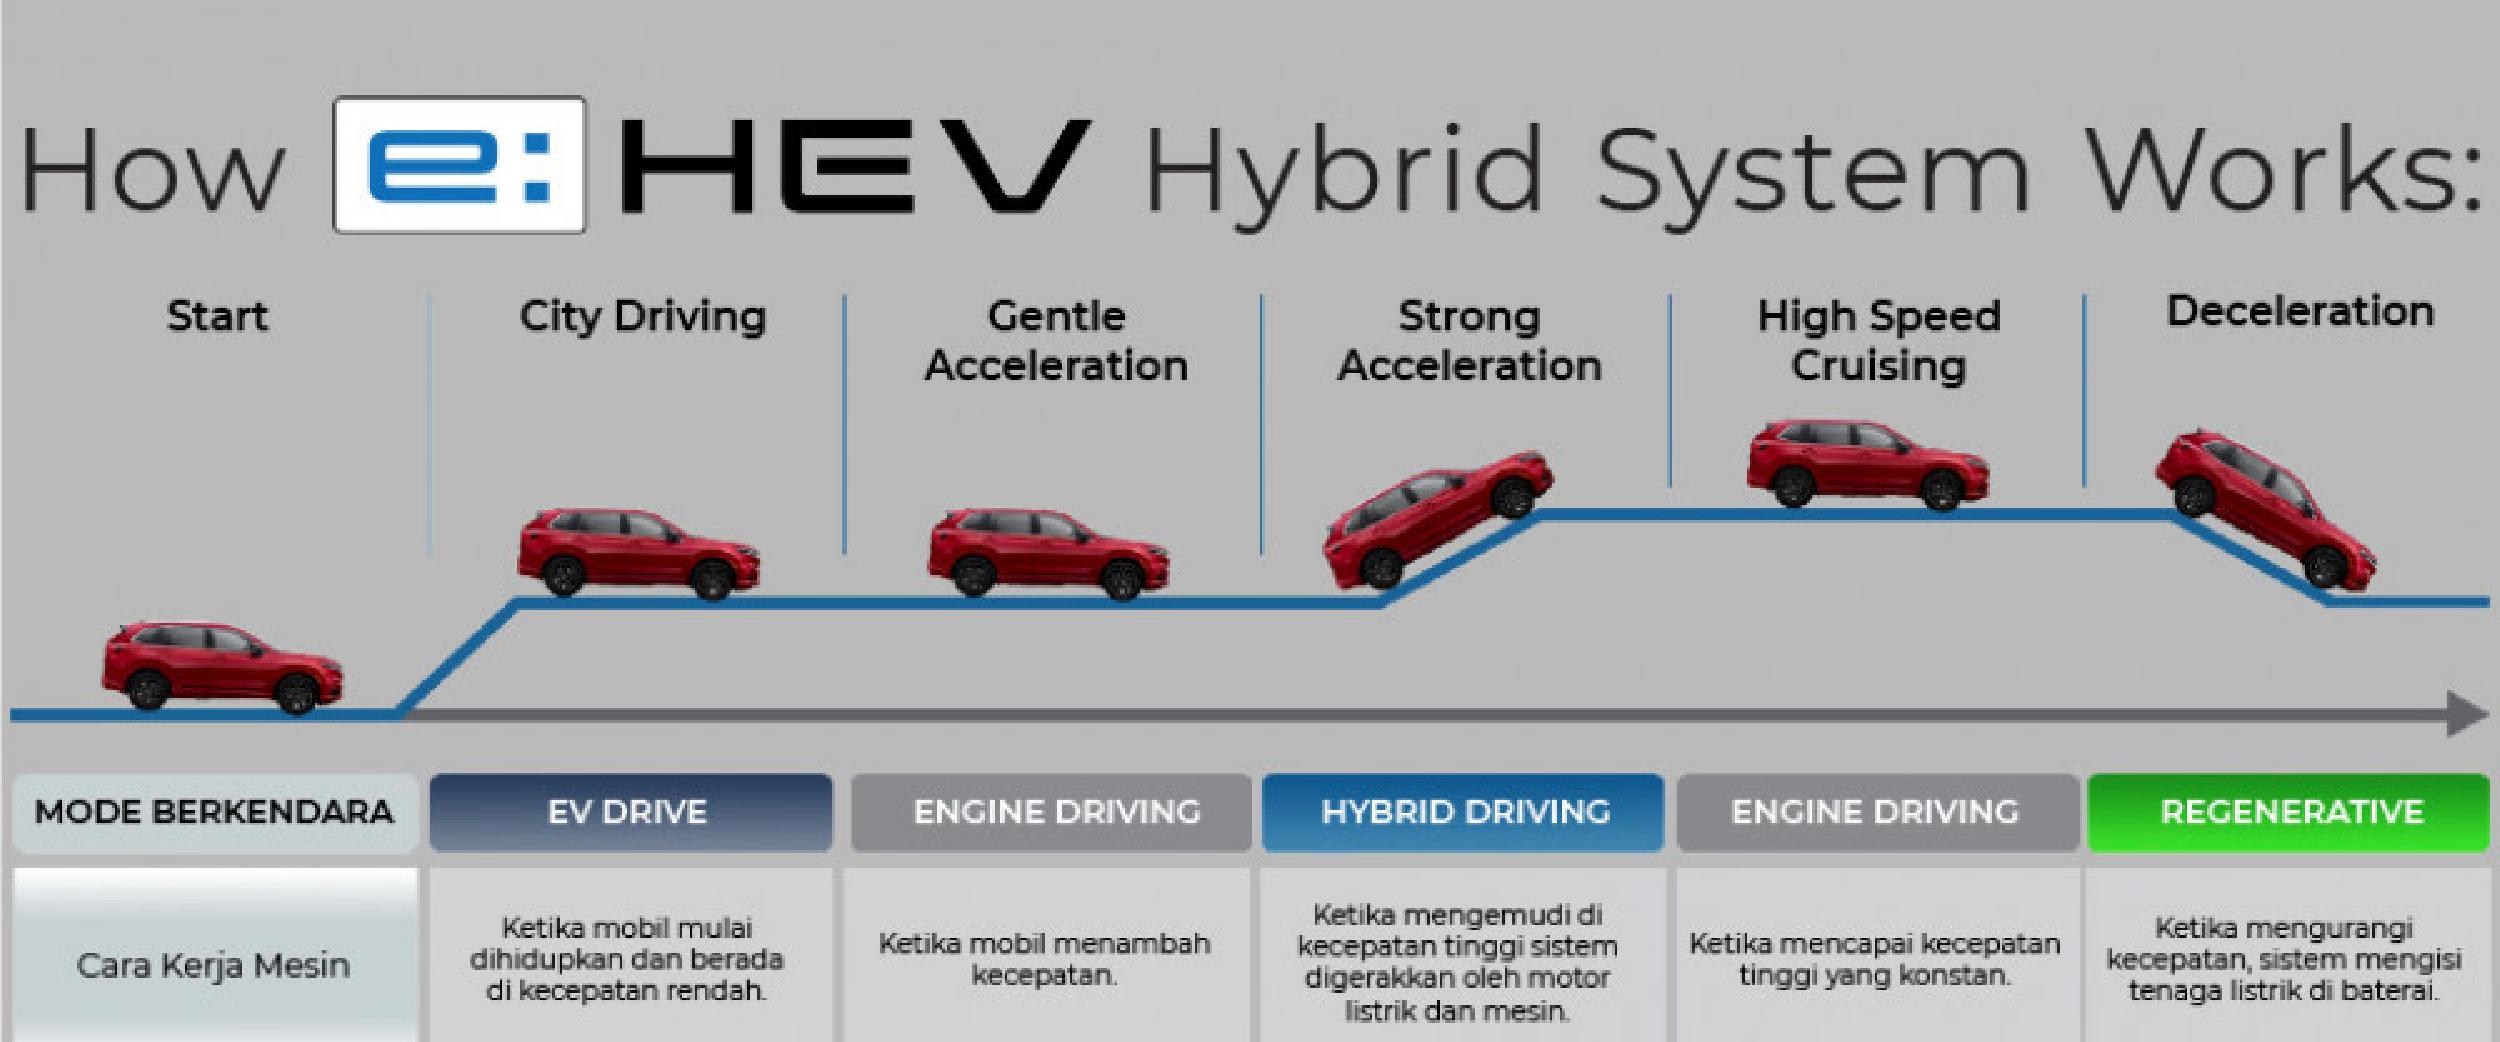 Cara kerja mesin Hybrid E: HEV Mobil Honda